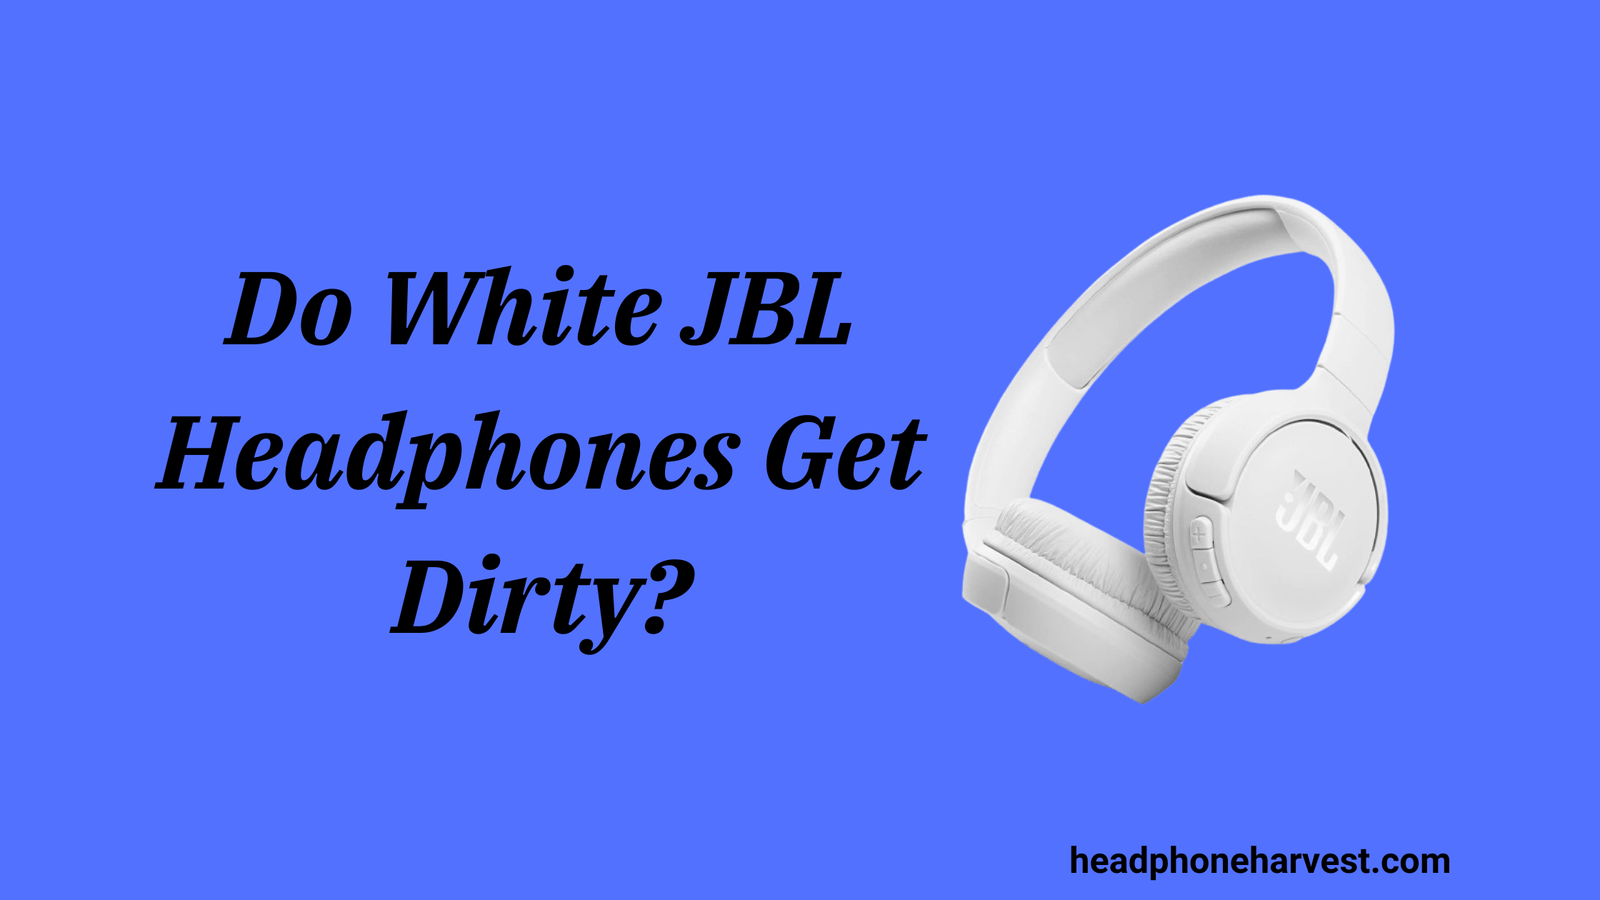 Do White JBL Headphones Get Dirty